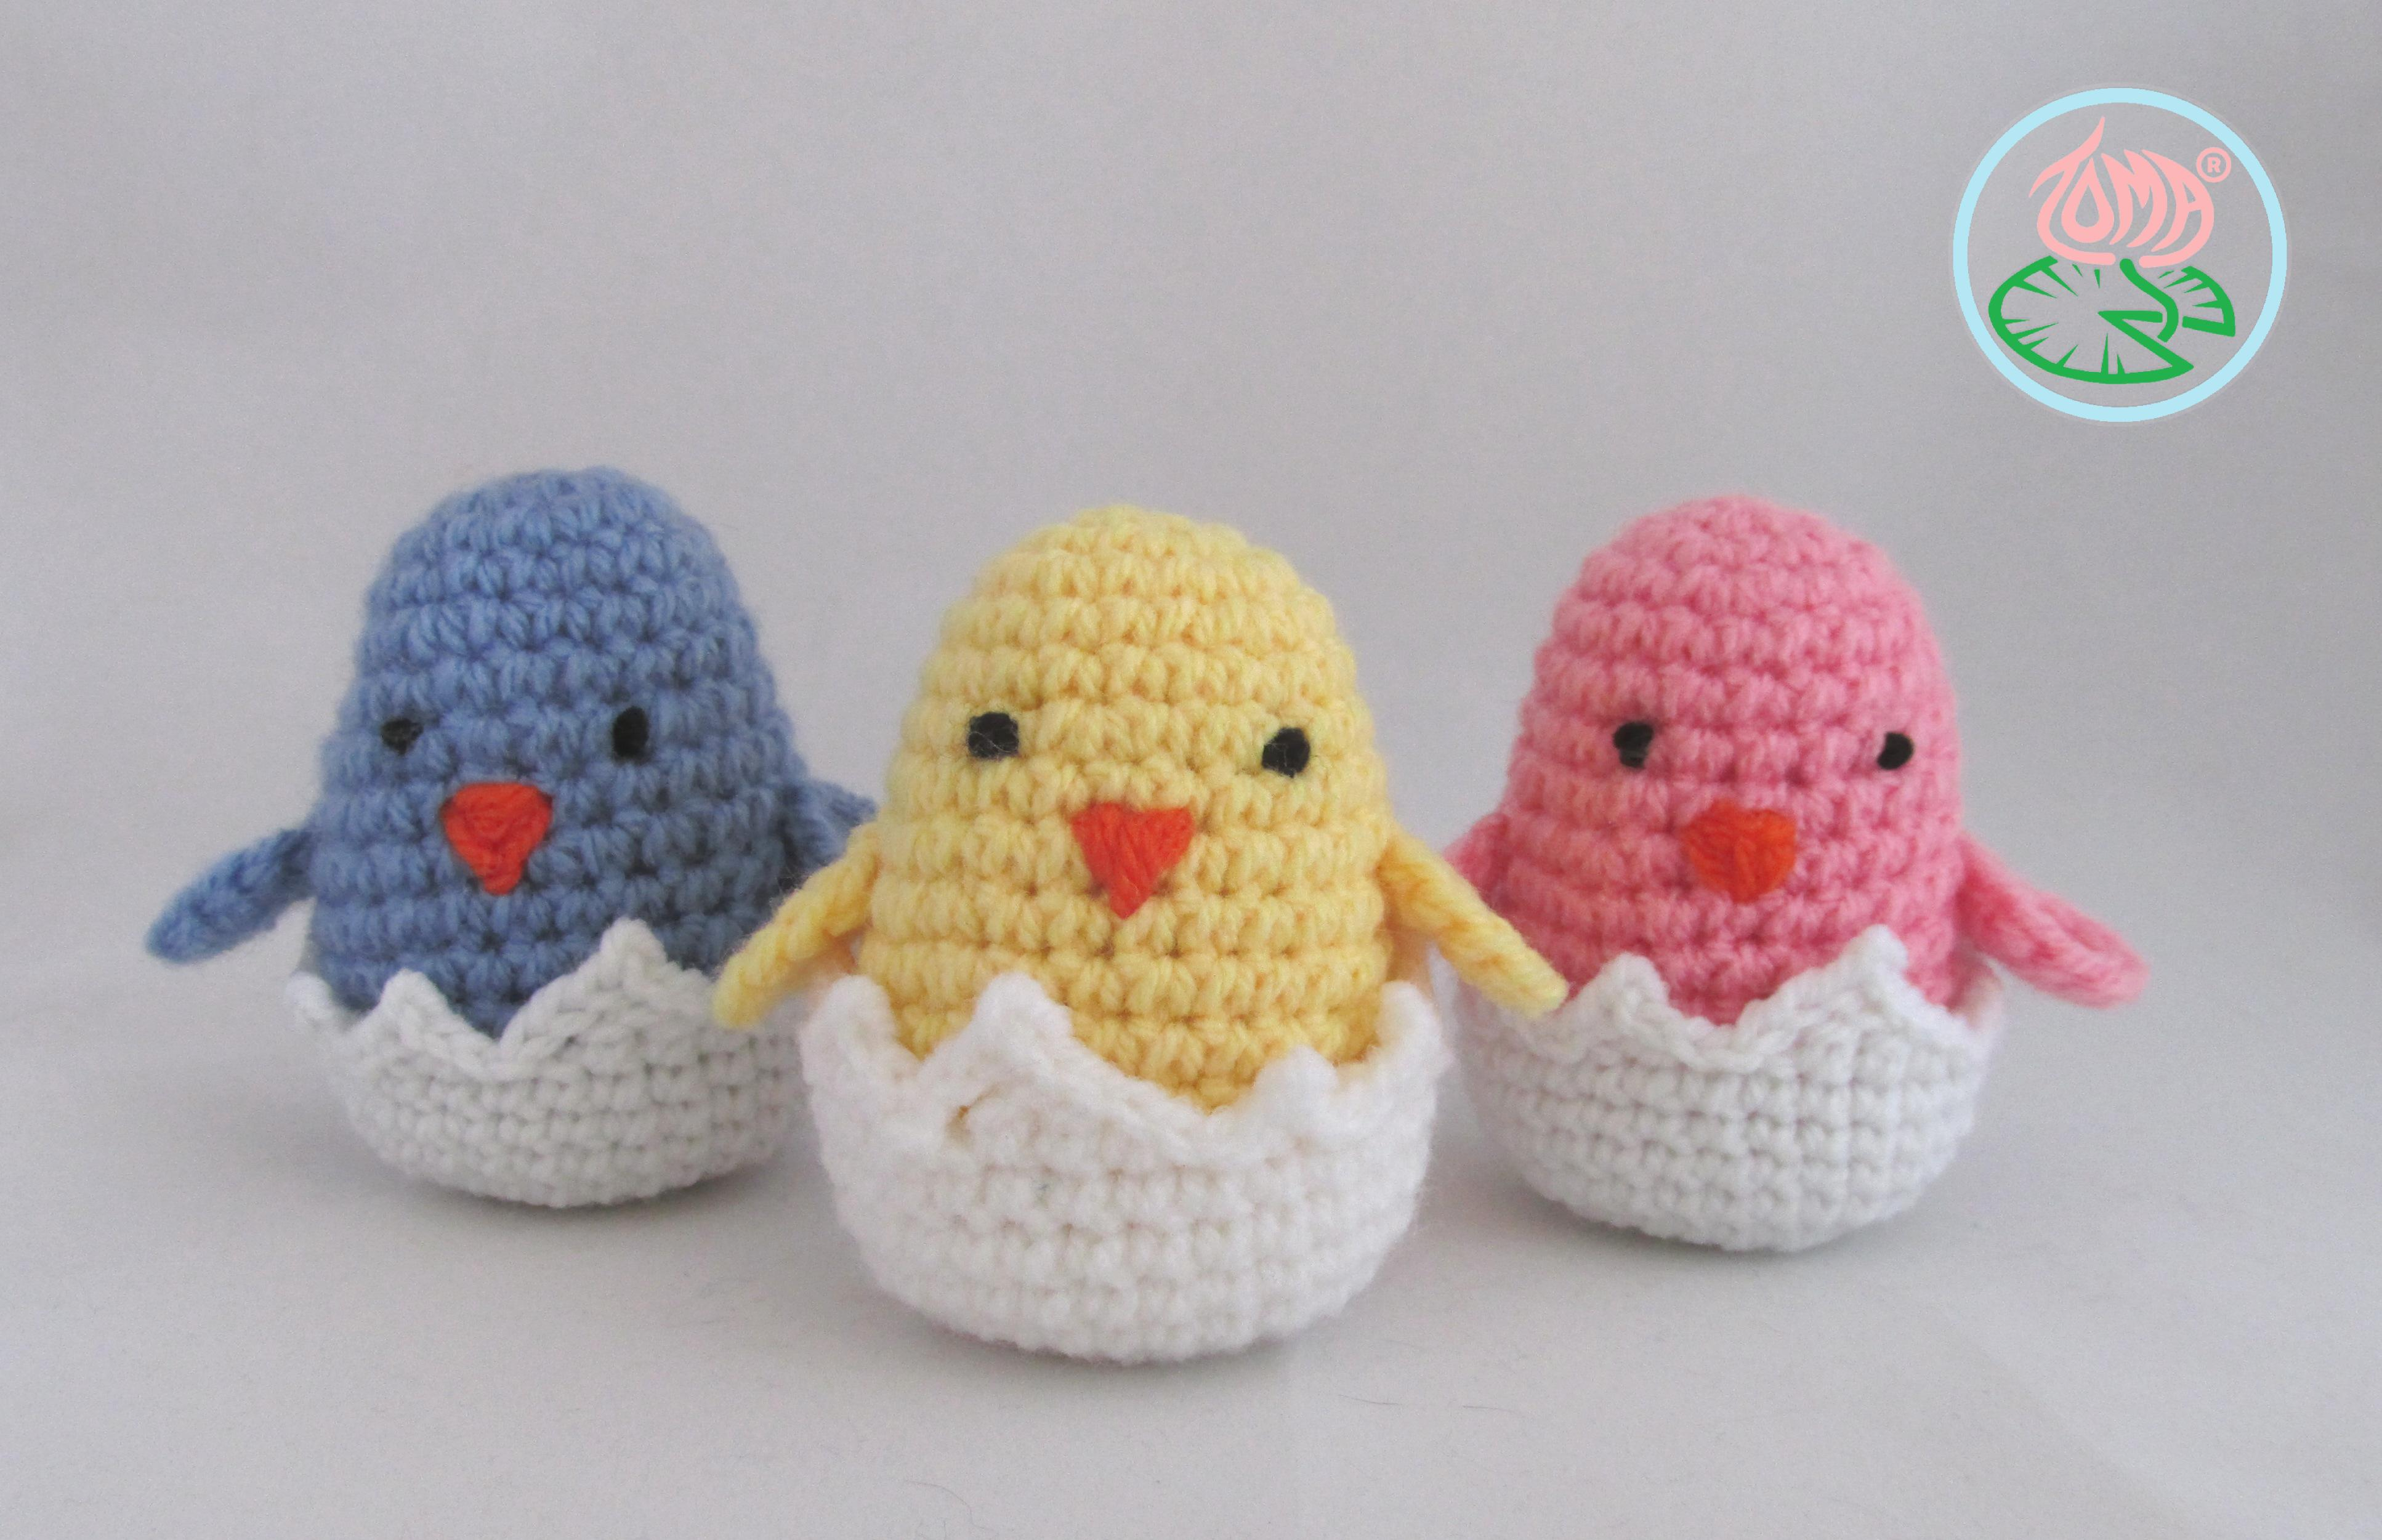 Amigurumi Crochet Patterns Amigurumi Hatching Easter Chicks Free Crochet Pattern Cool